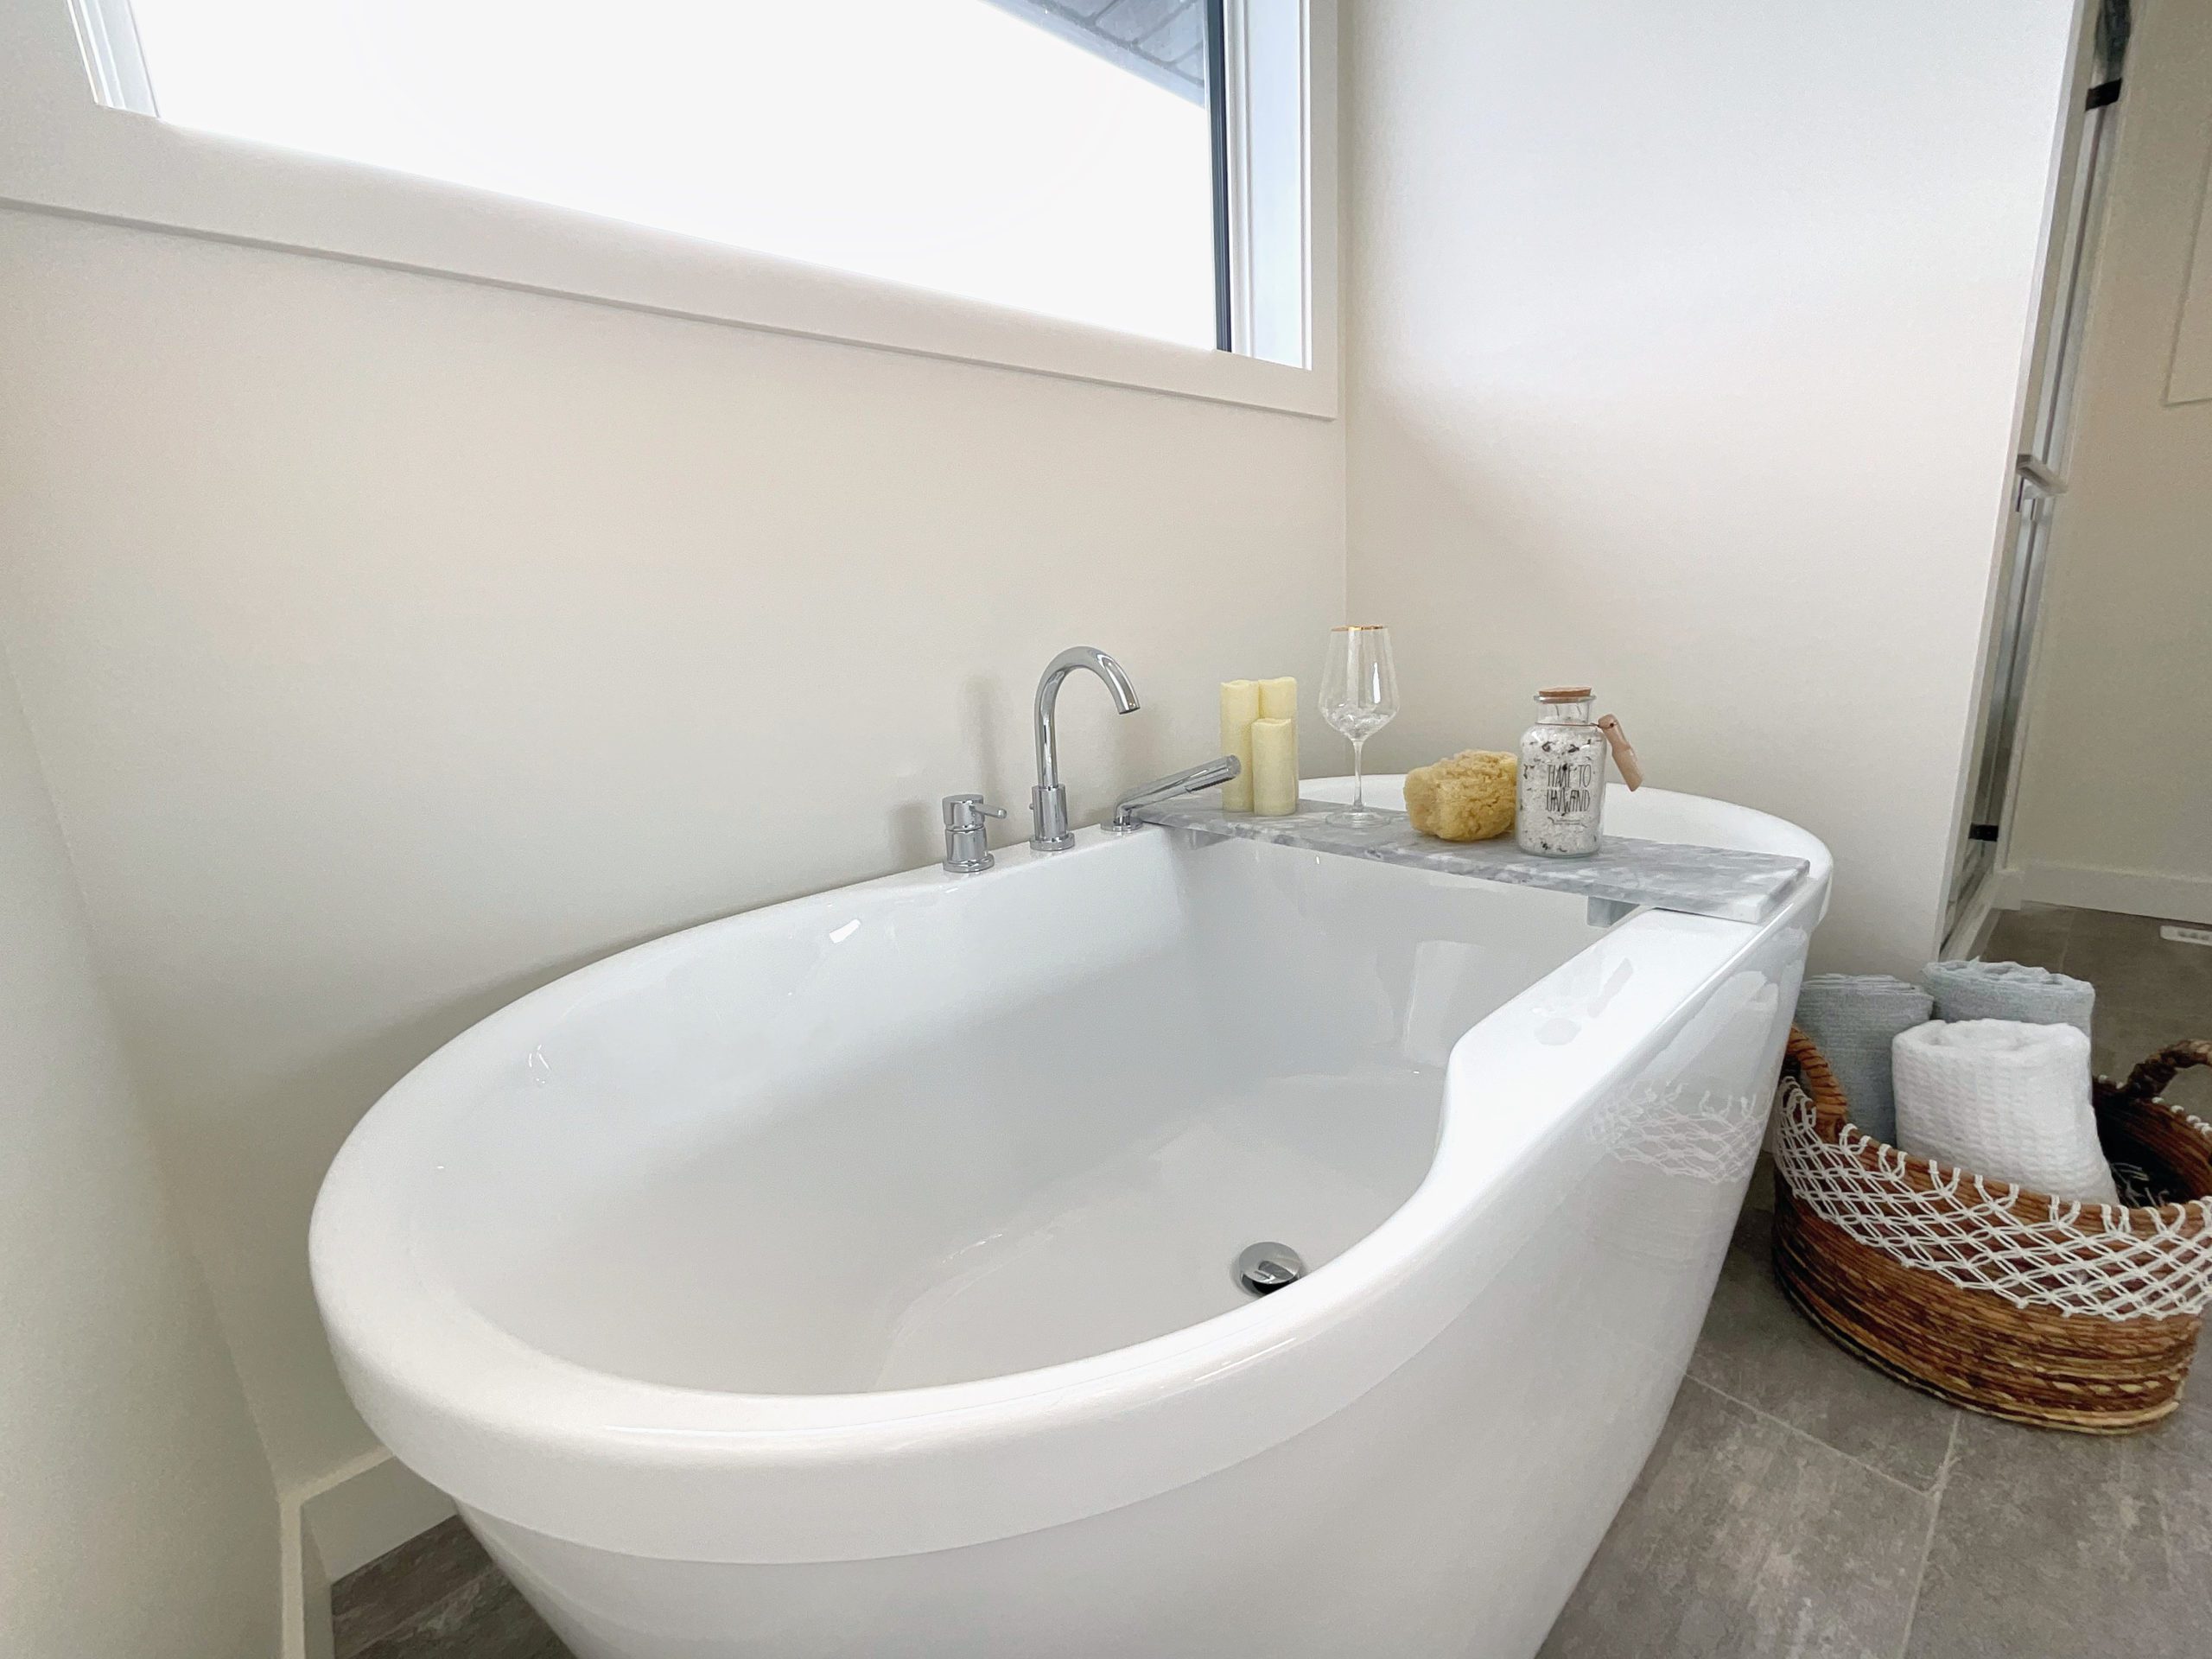 A white freestanding bath tub sitting next to a window.